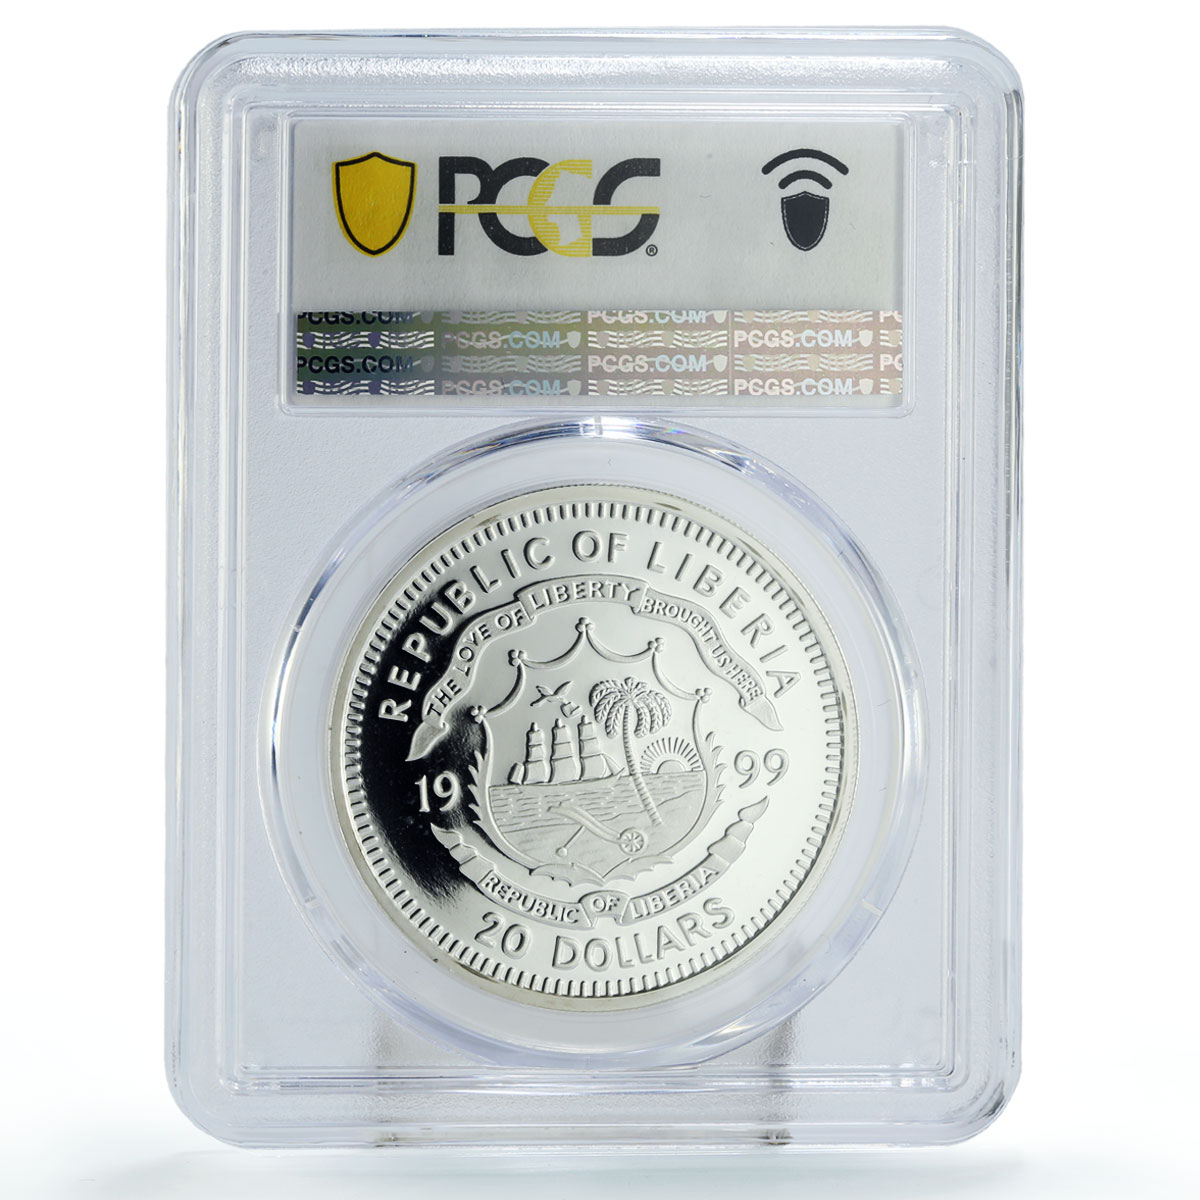 Liberia 20 dollars Lunar Year of the Rabbit Running PR67 PCGS silver coin 1999